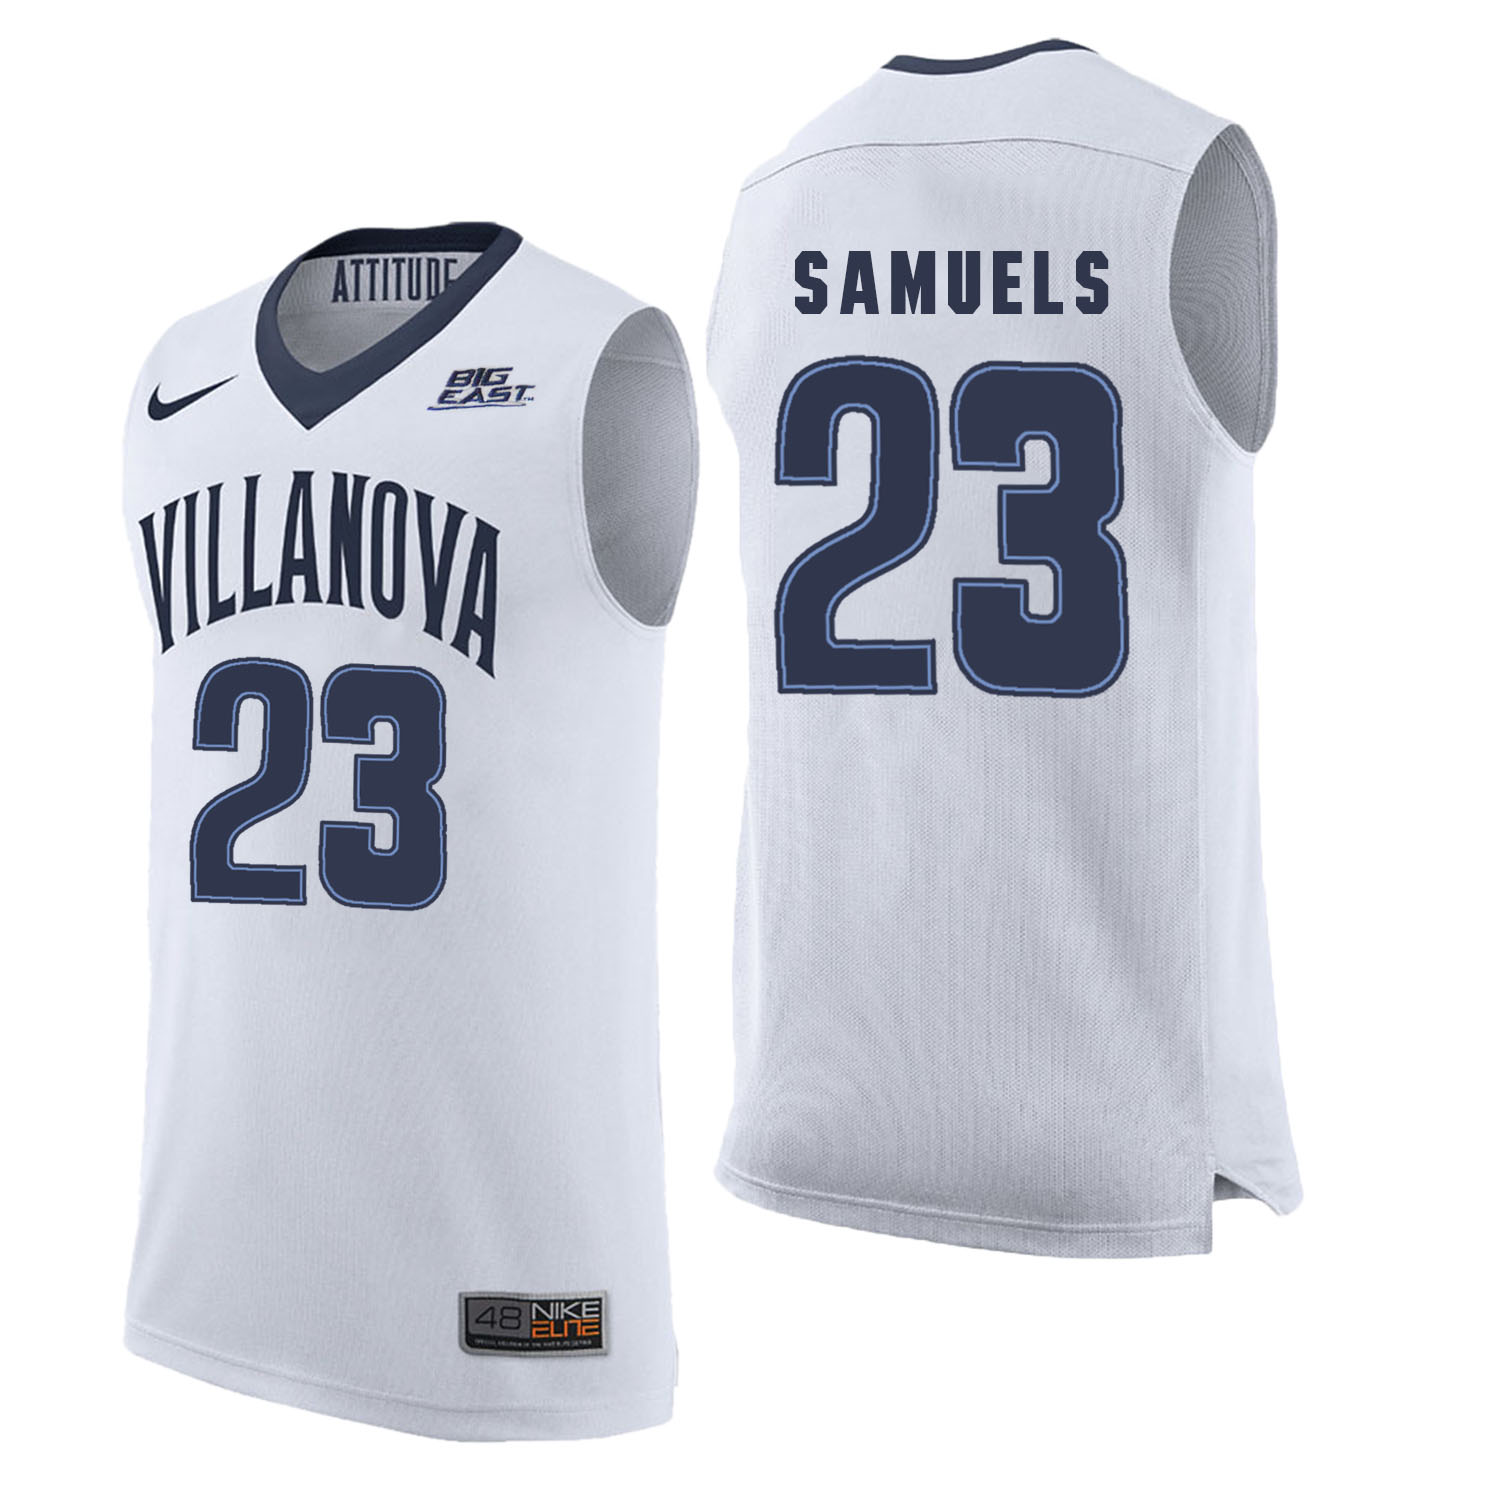 Villanova Wildcats 23 Jermaine Samuels White College Basketball Elite Jersey